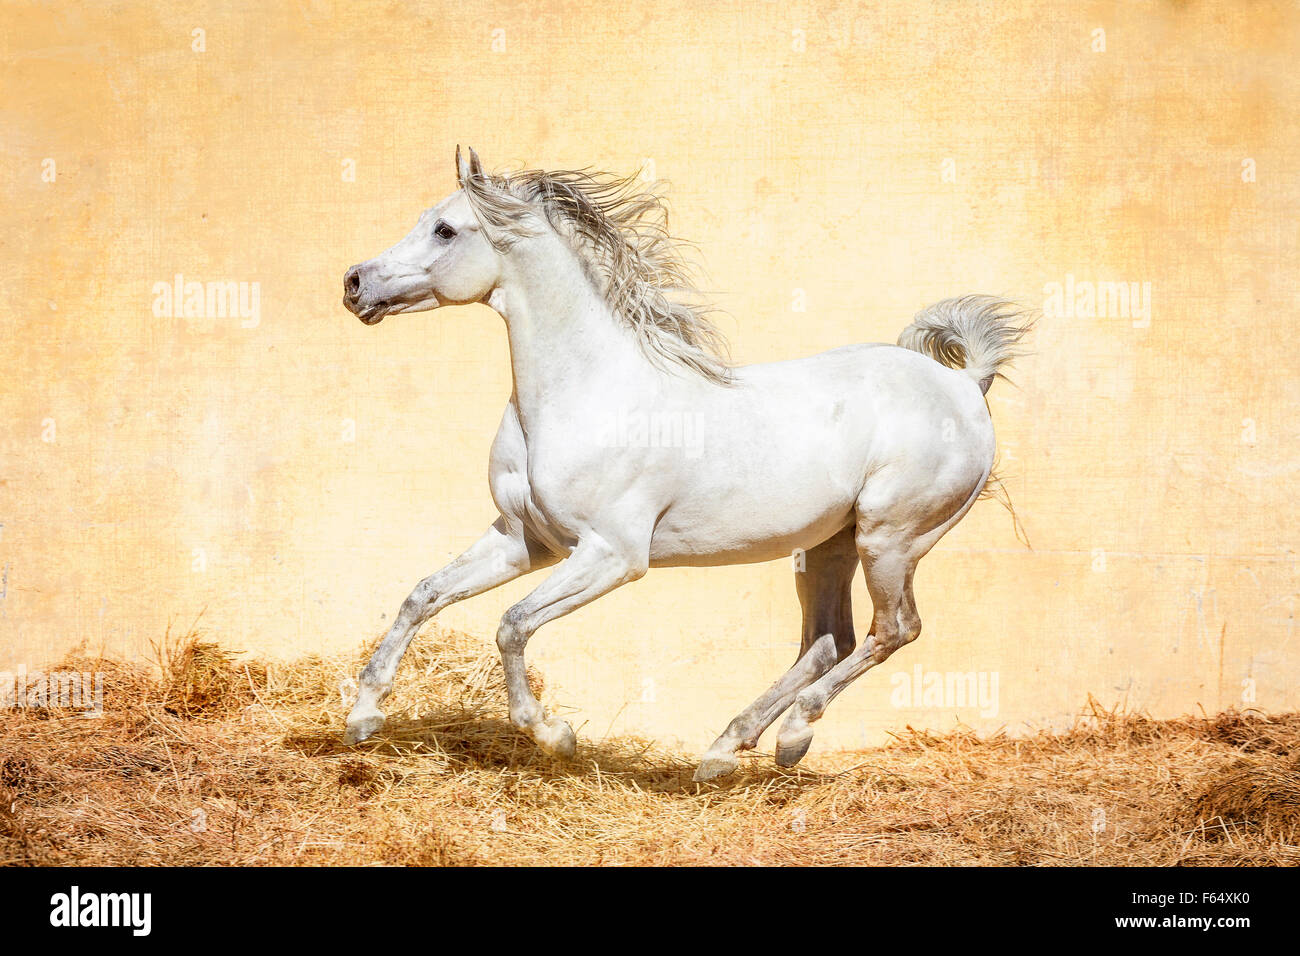 Arab Horse, Arabian Horse. Gray stallion galloping in a paddock. Egypt Stock Photo